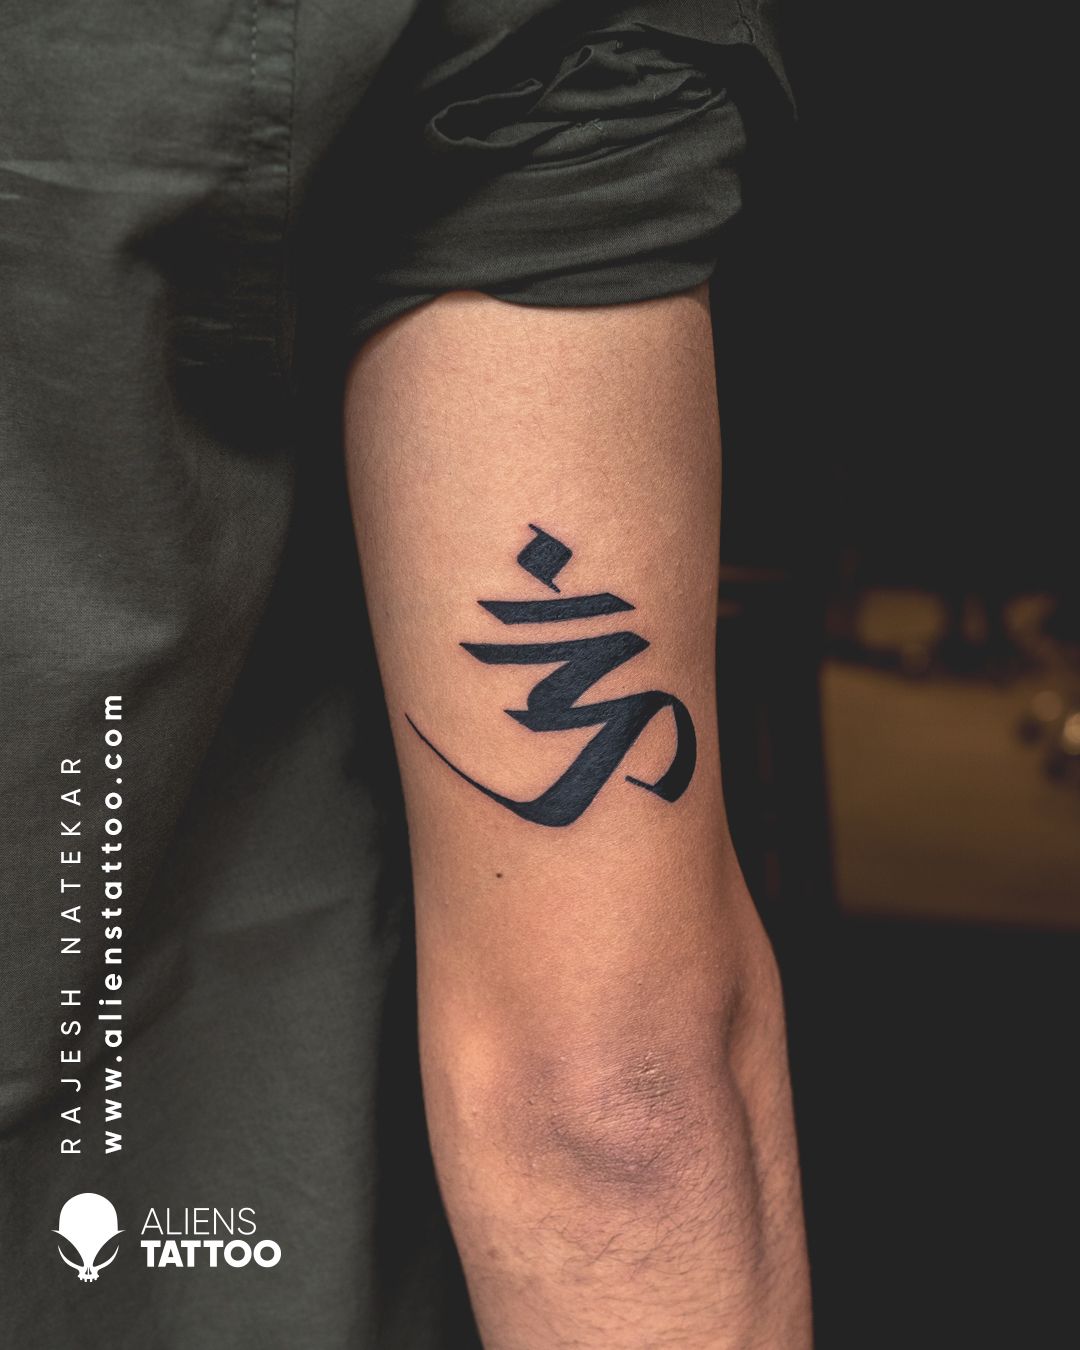 Details more than 55 rajesh tattoo designs latest  incdgdbentre